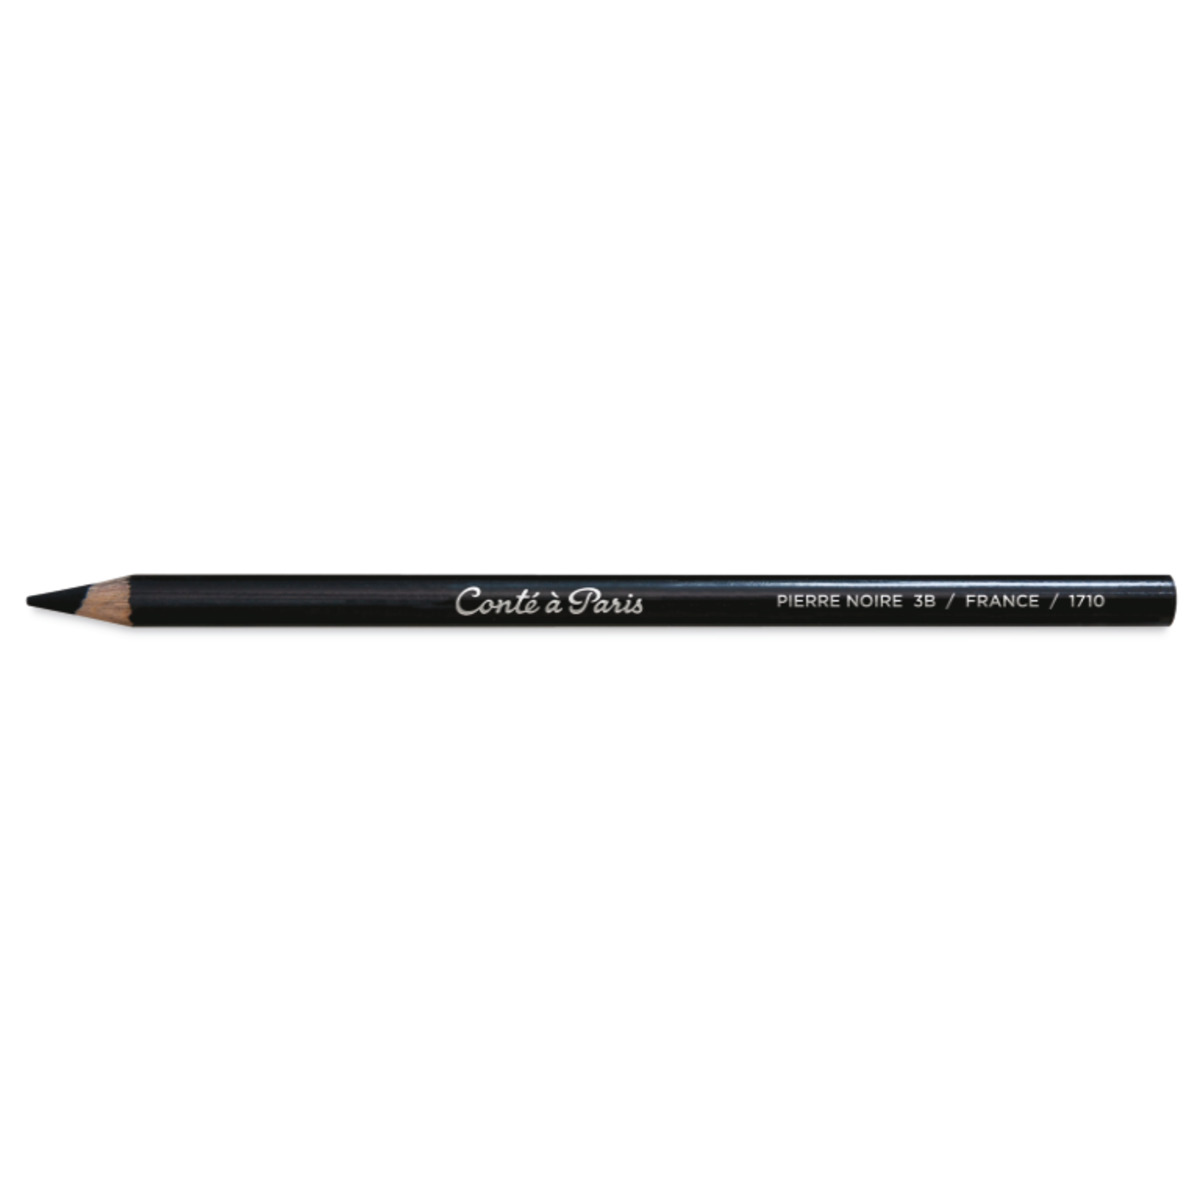 Conte a Paris Carres Sketching Sets 12 Black Crayons HB, B or 2B